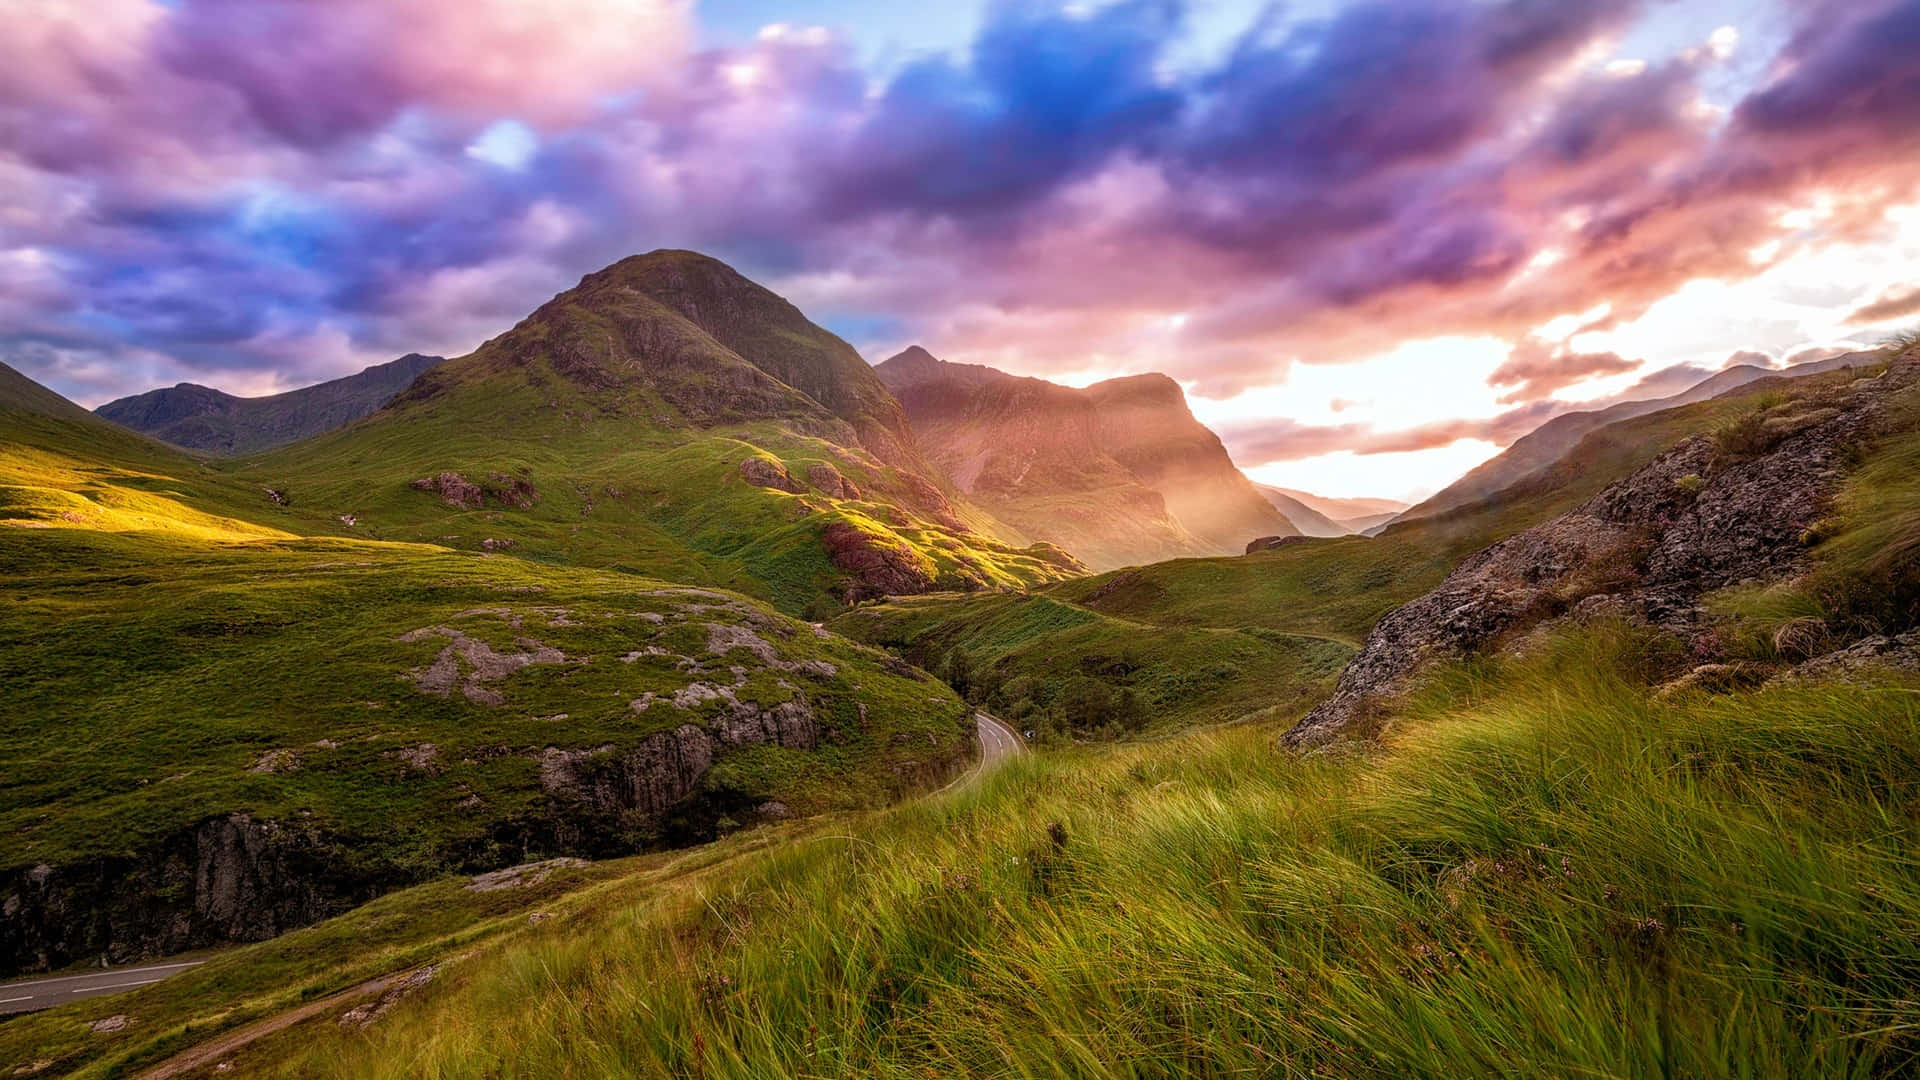 "The Highlands of Scotland" Wallpaper